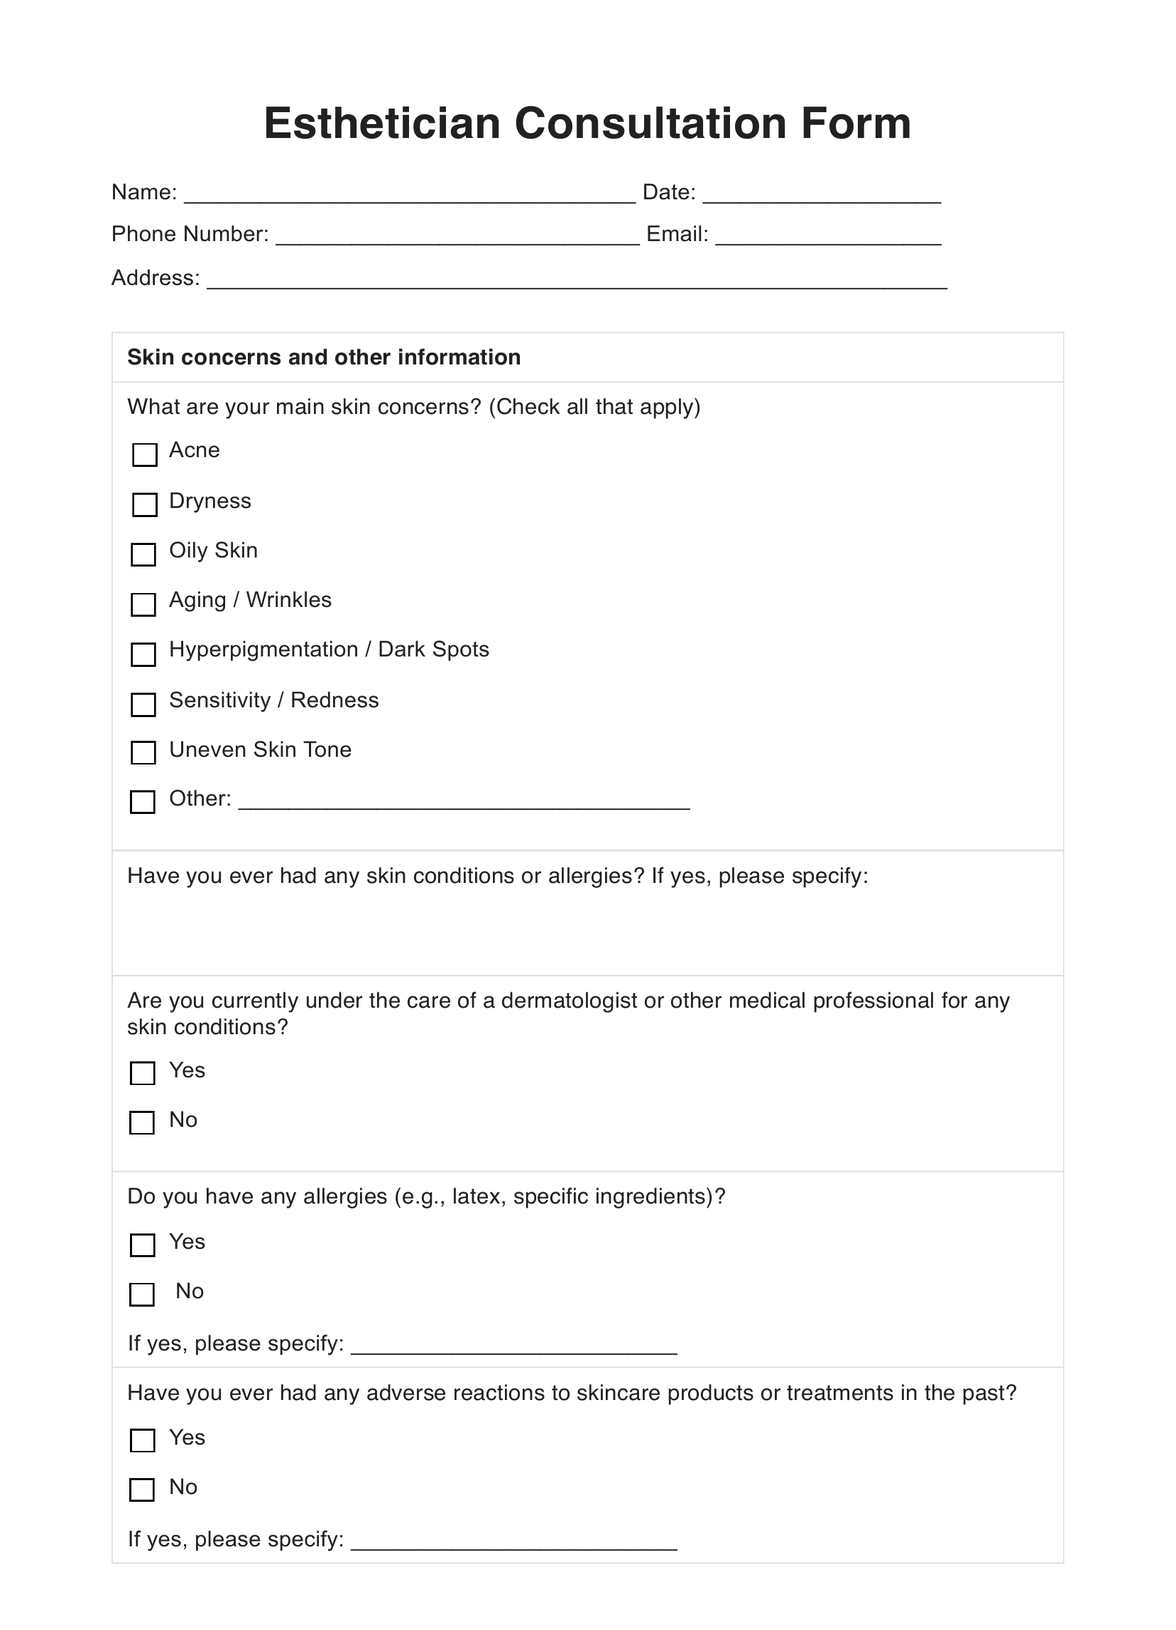 Esthetician Consultation Form PDF Example